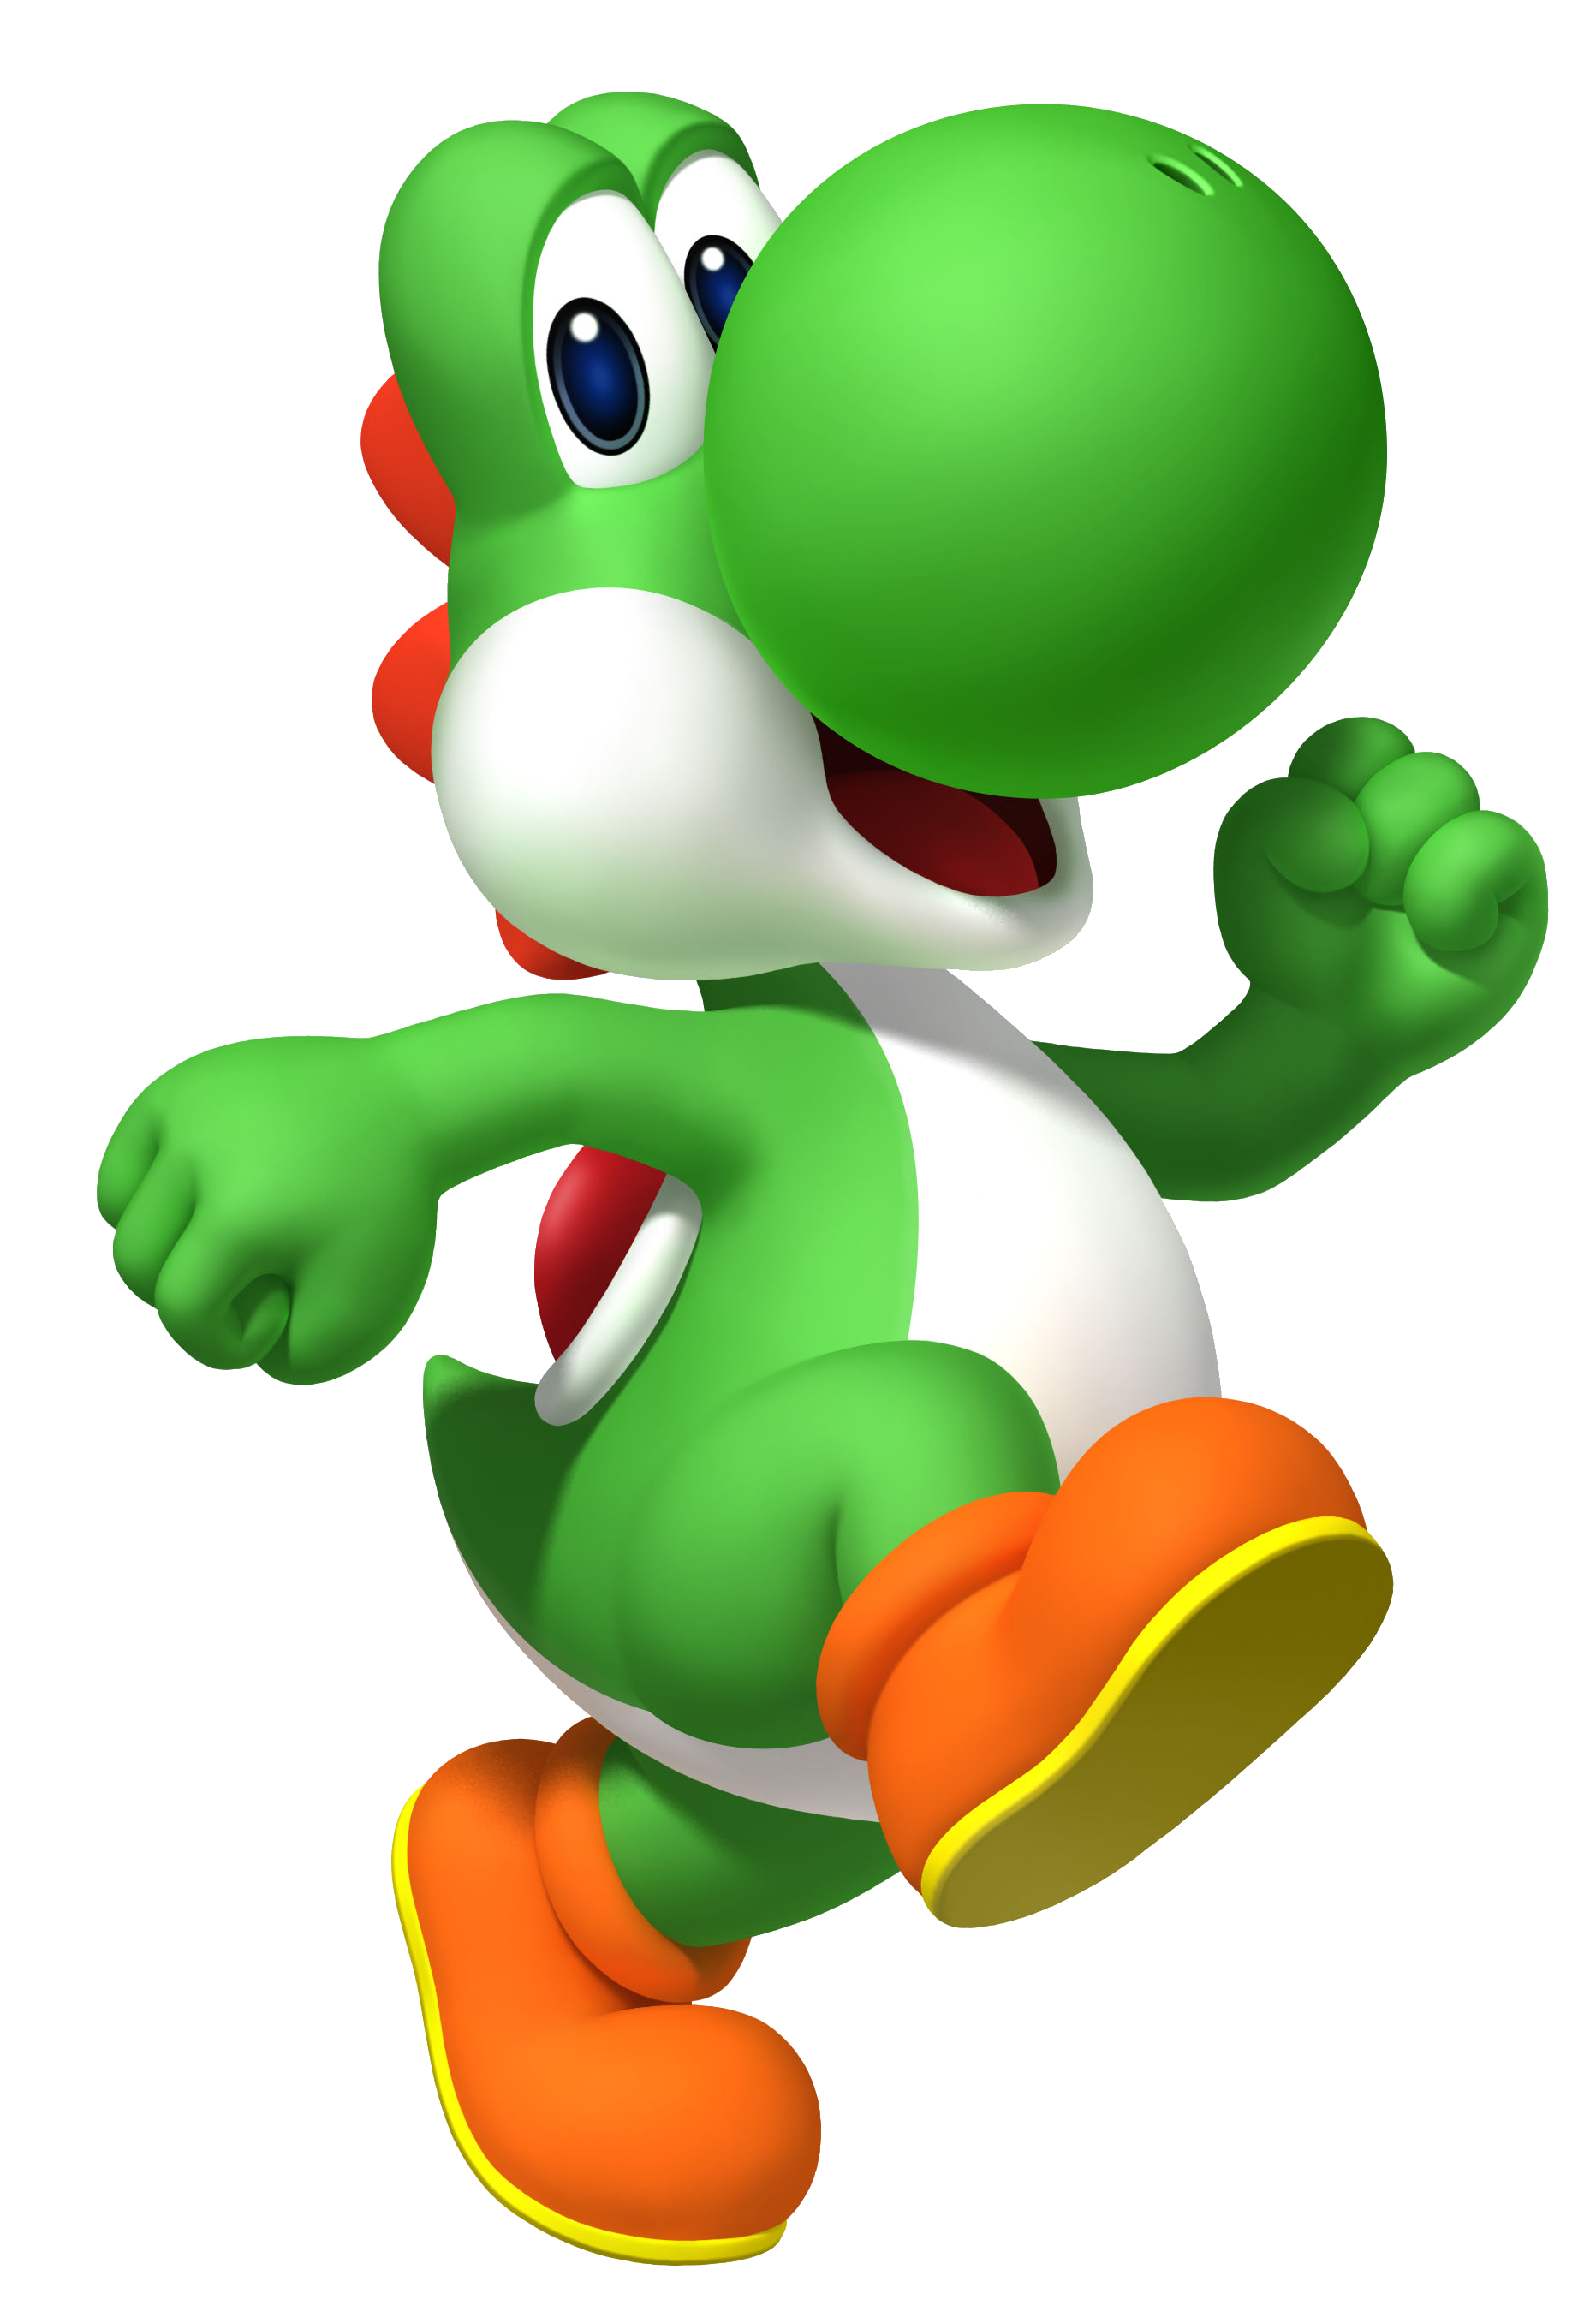 Lakitu - Super Mario Wiki, the Mario encyclopedia